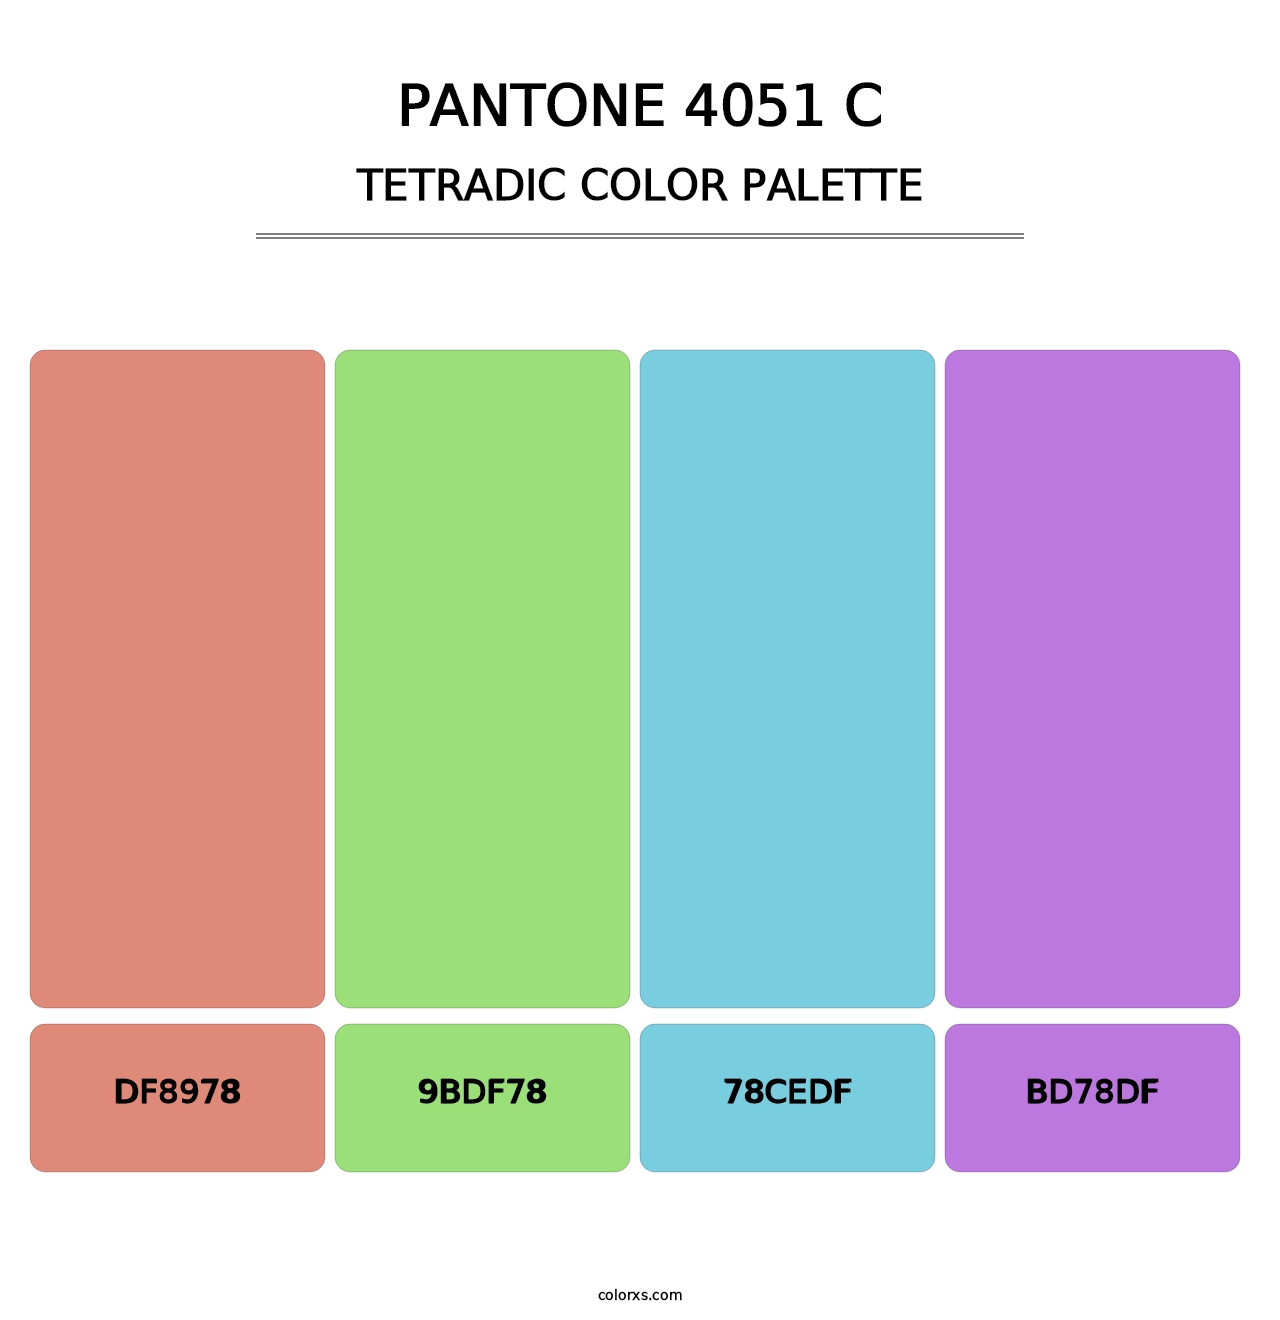 PANTONE 4051 C - Tetradic Color Palette